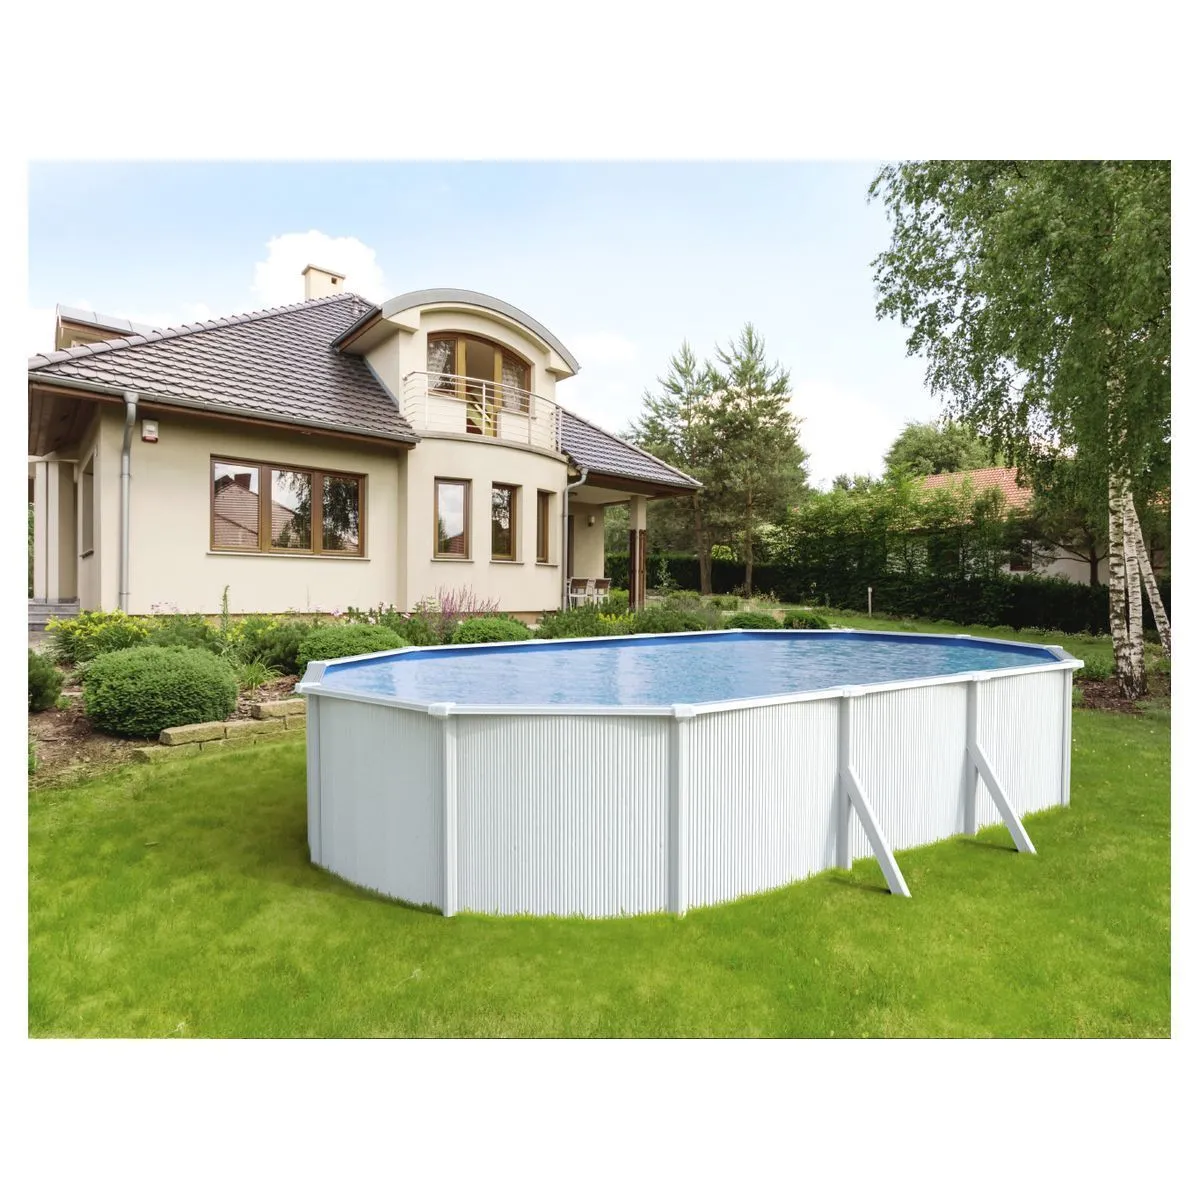 piscine ovale hors sol en acier blanc saphir - 5,15 x 3,90 m